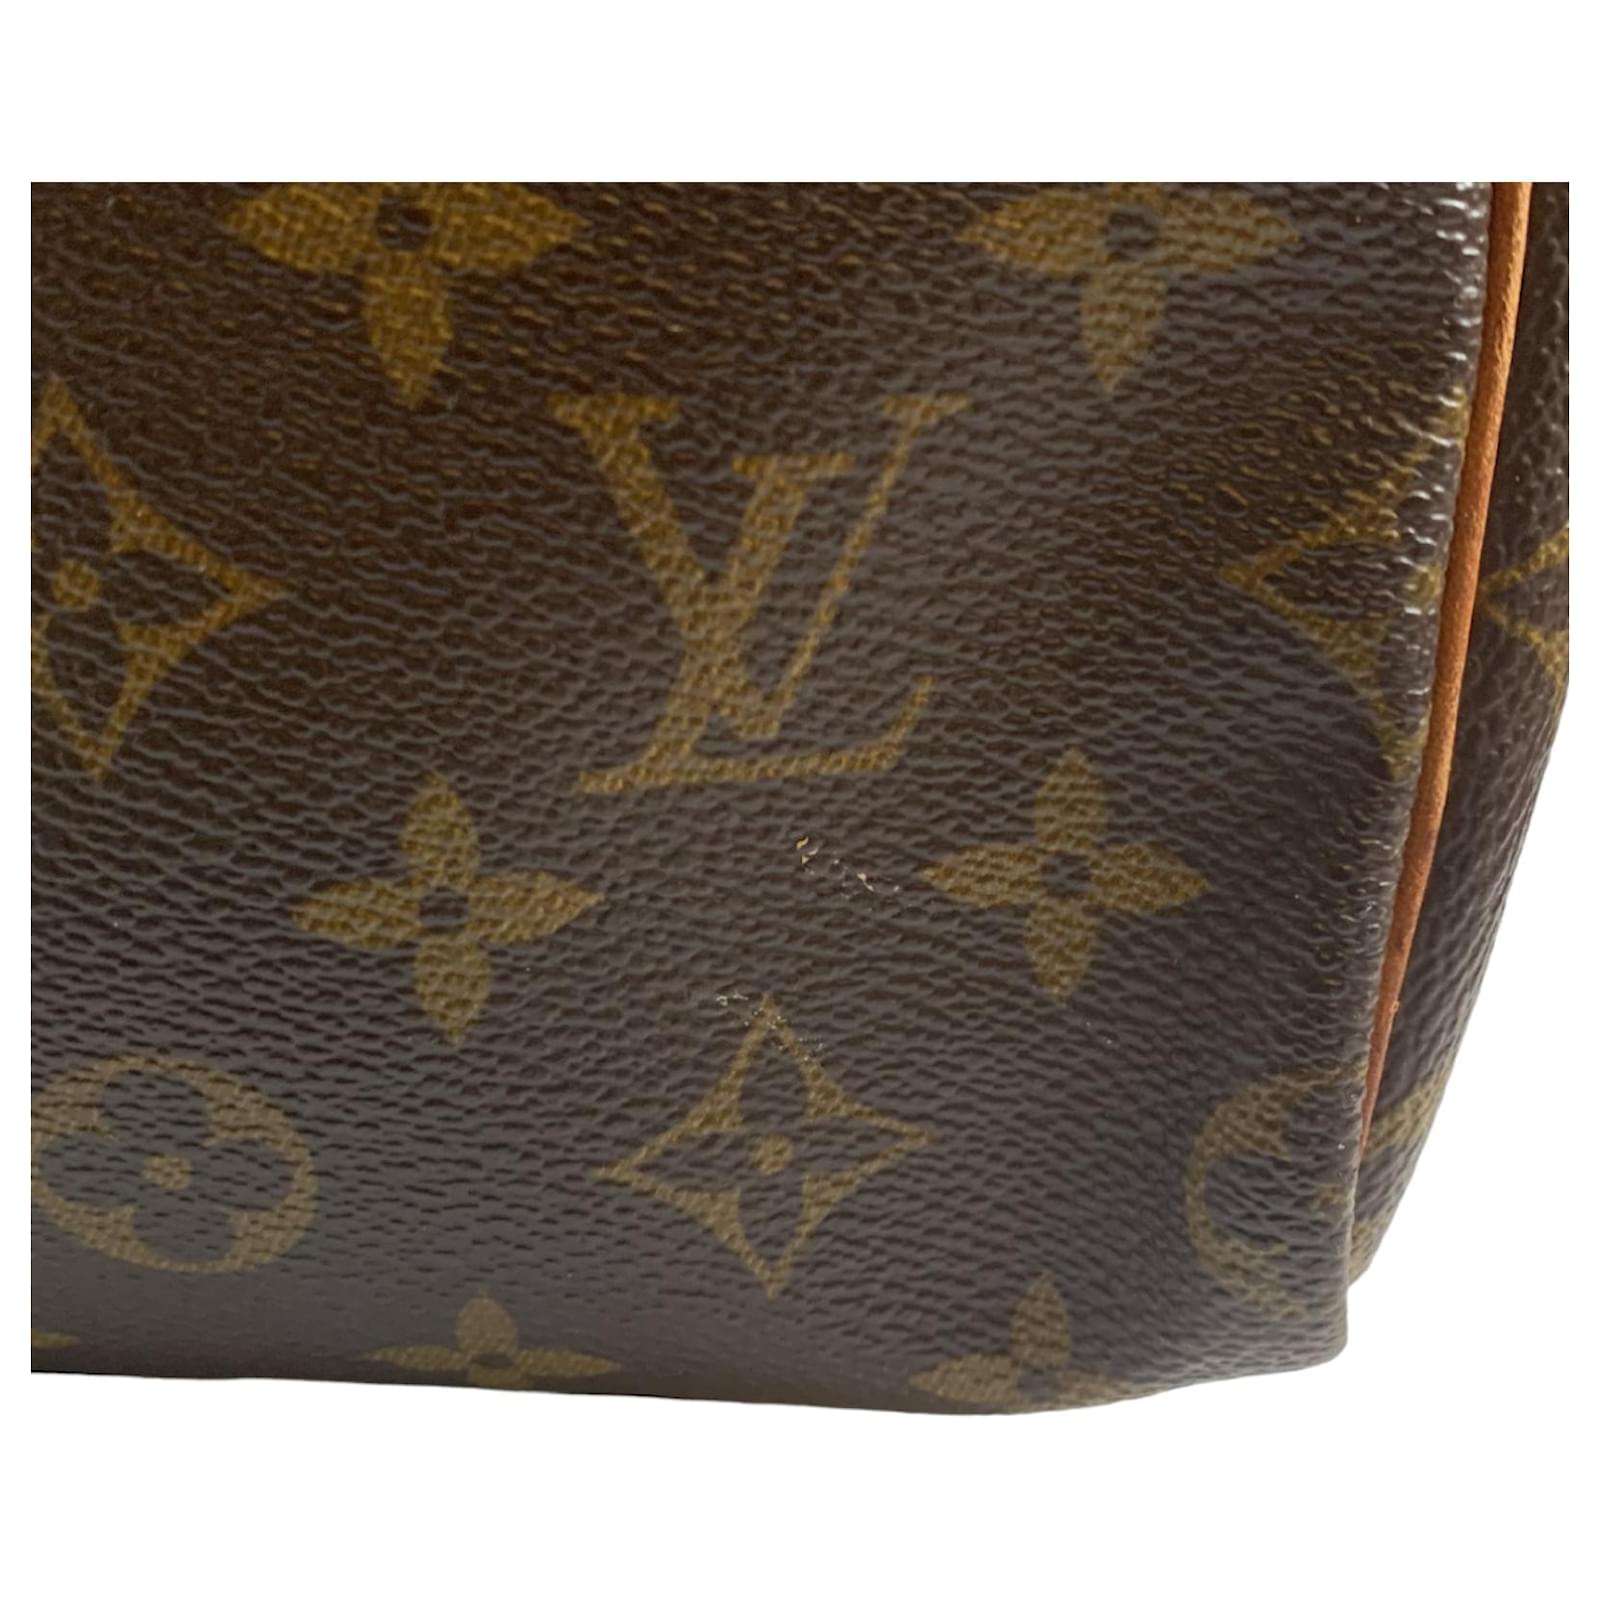 Louis Vuitton 1994 pre-owned Speedy 35 handbag